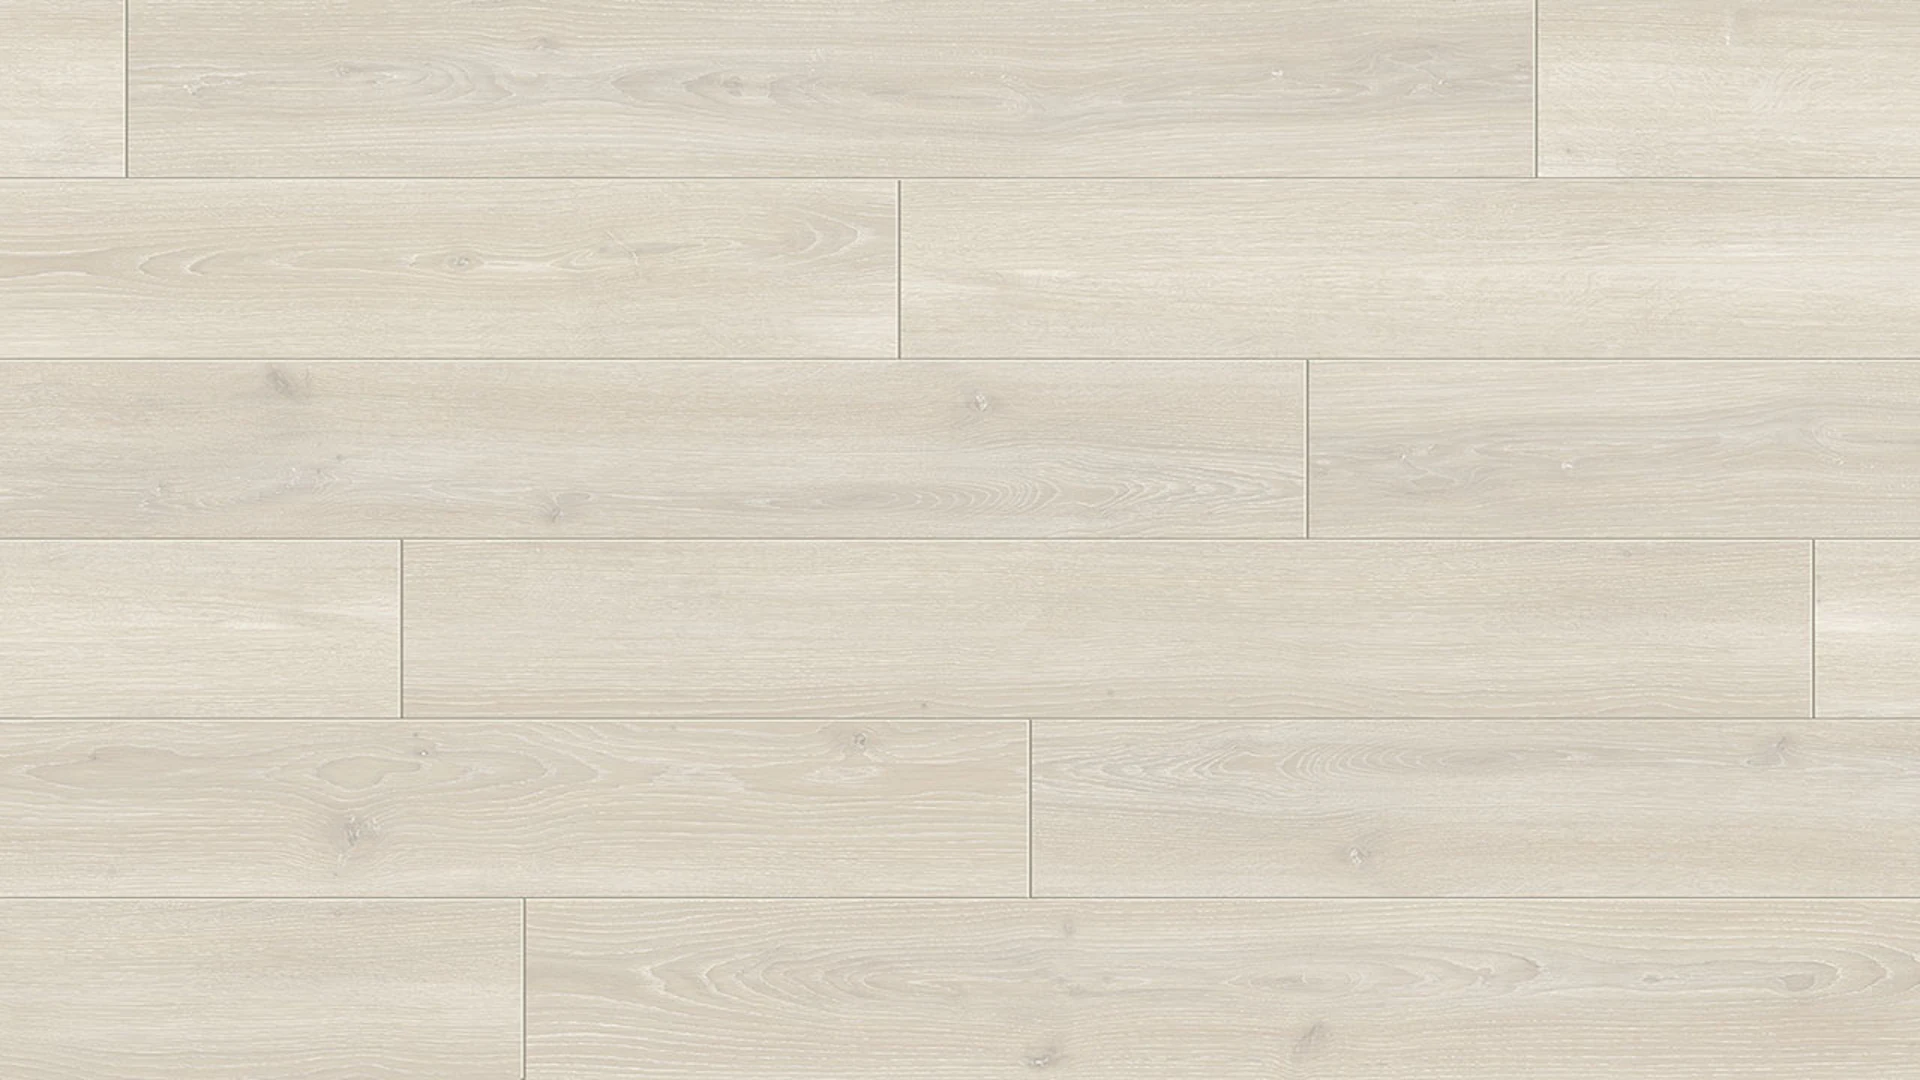 Parador laminate flooring - 1050 4V Oak Skyline White